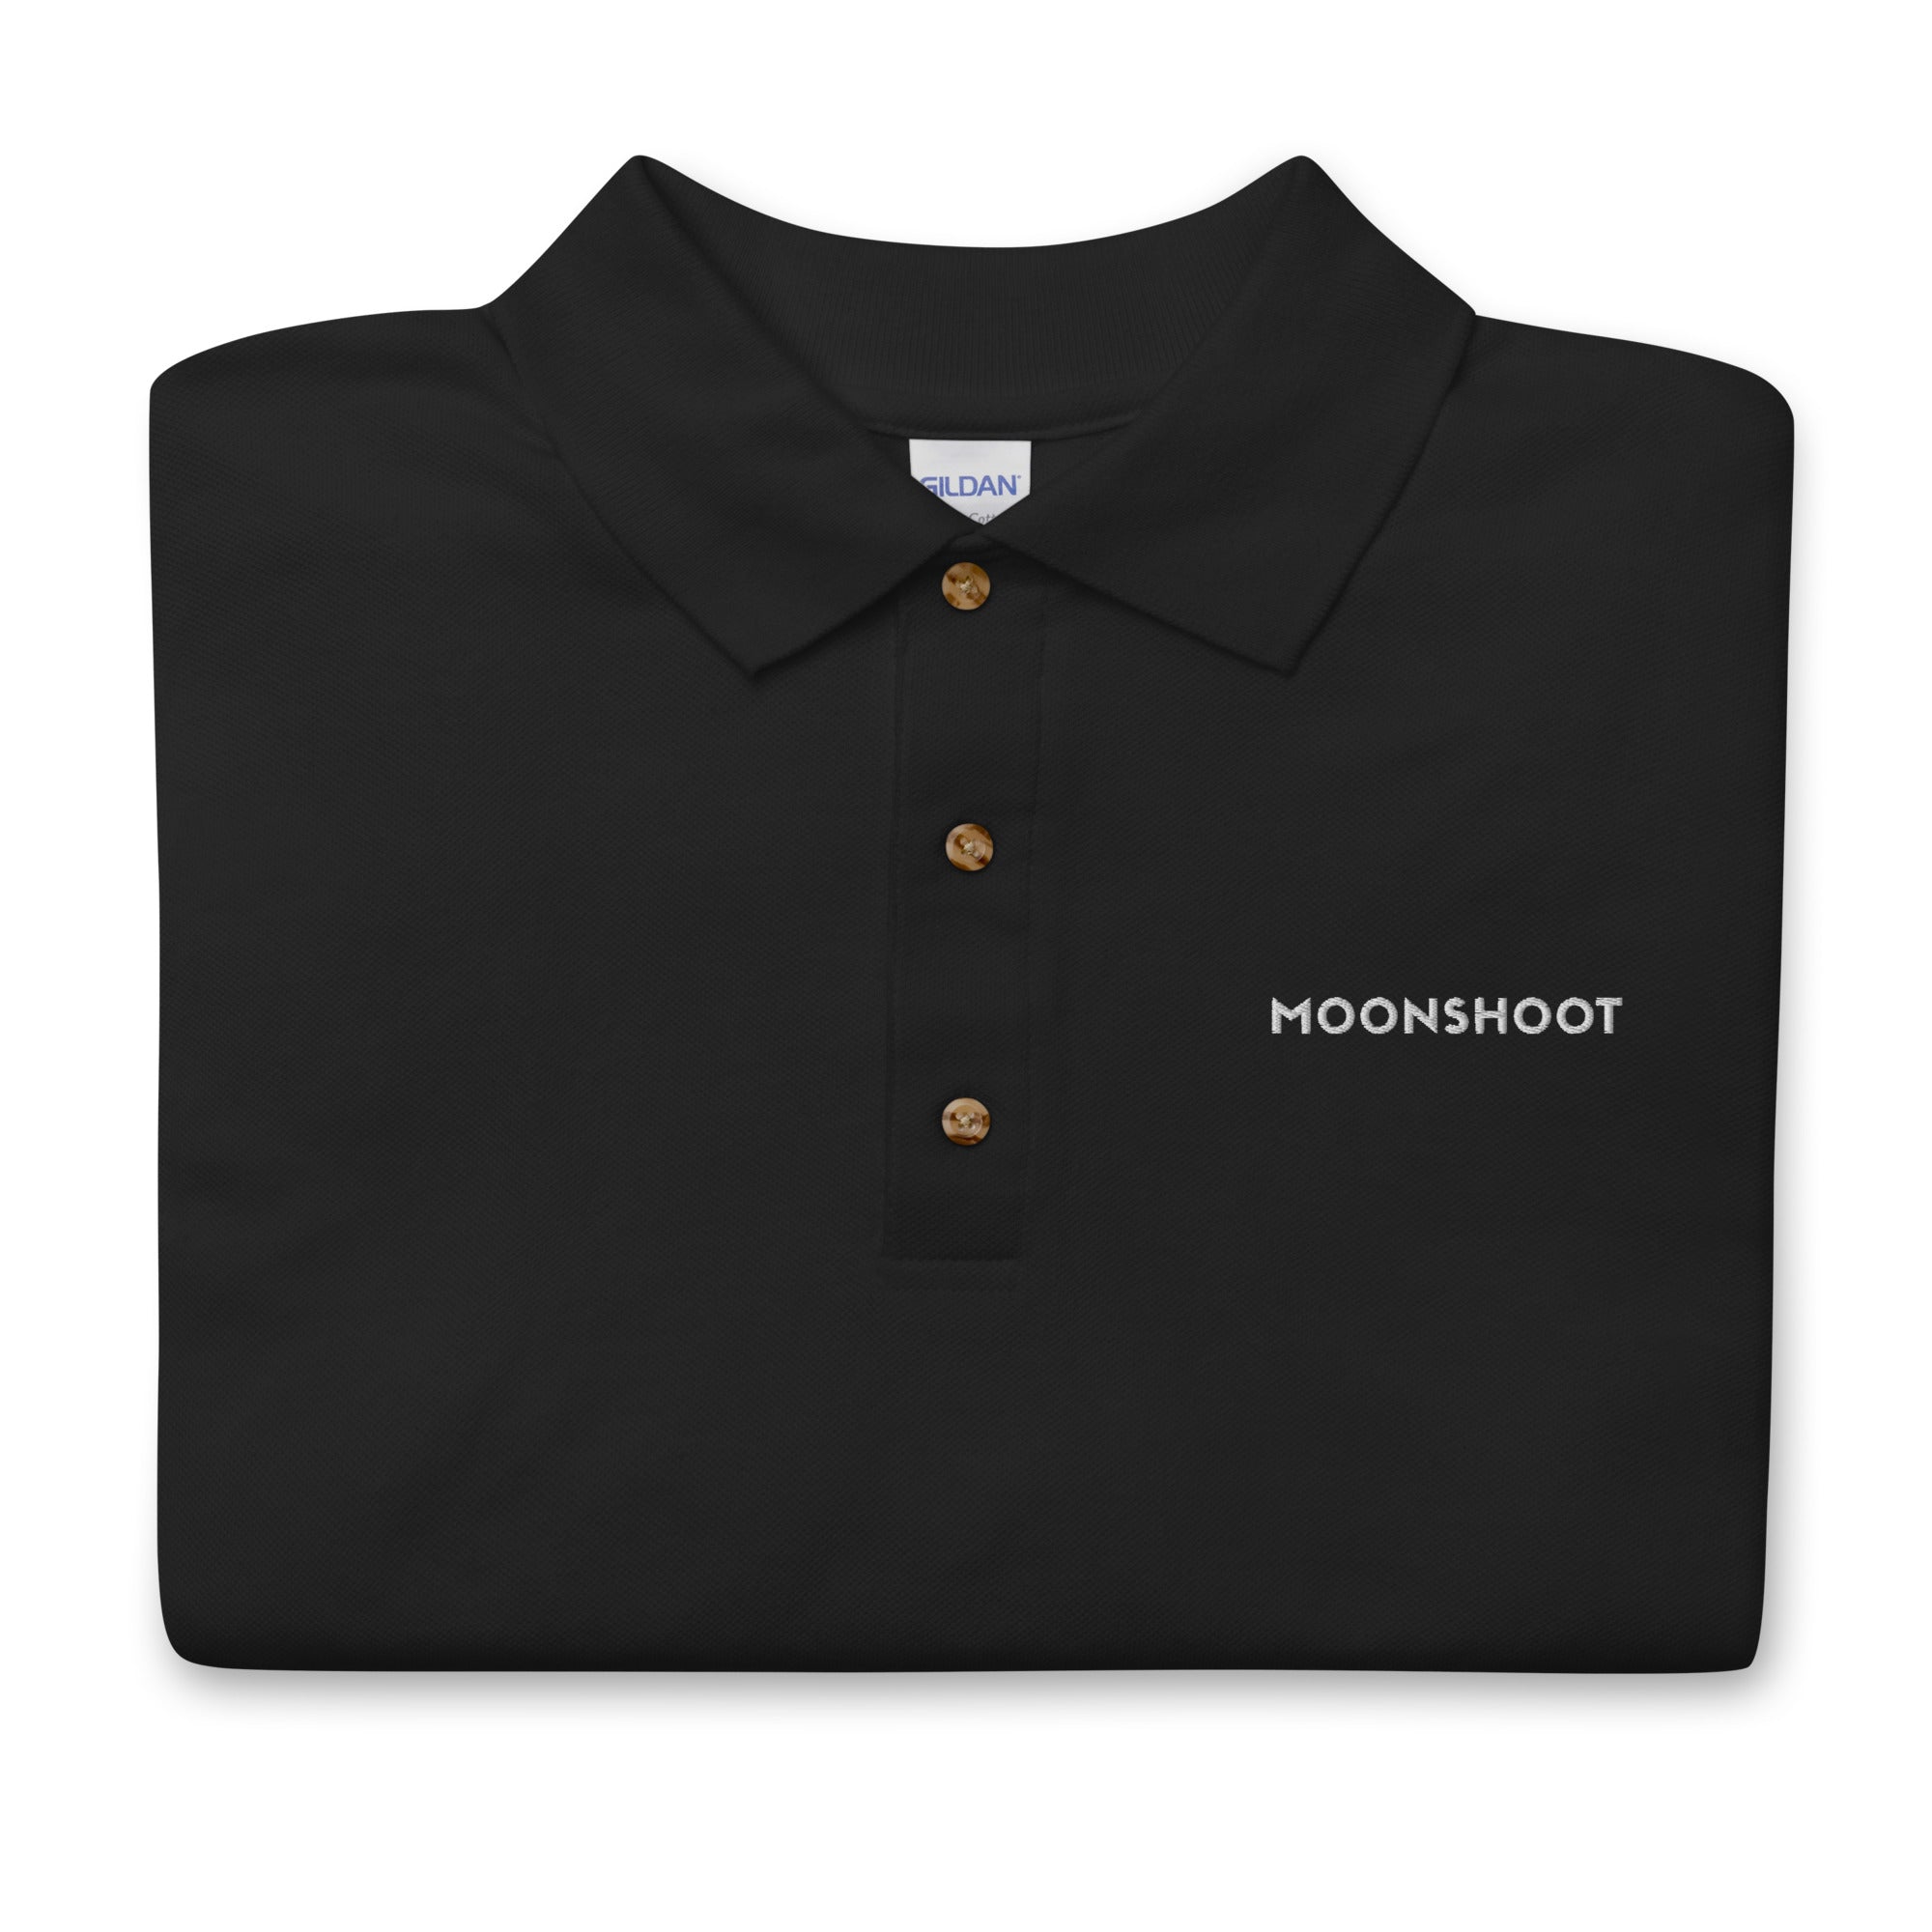 MOONSHOOT Signature Logo Embroidered Polo Shirt